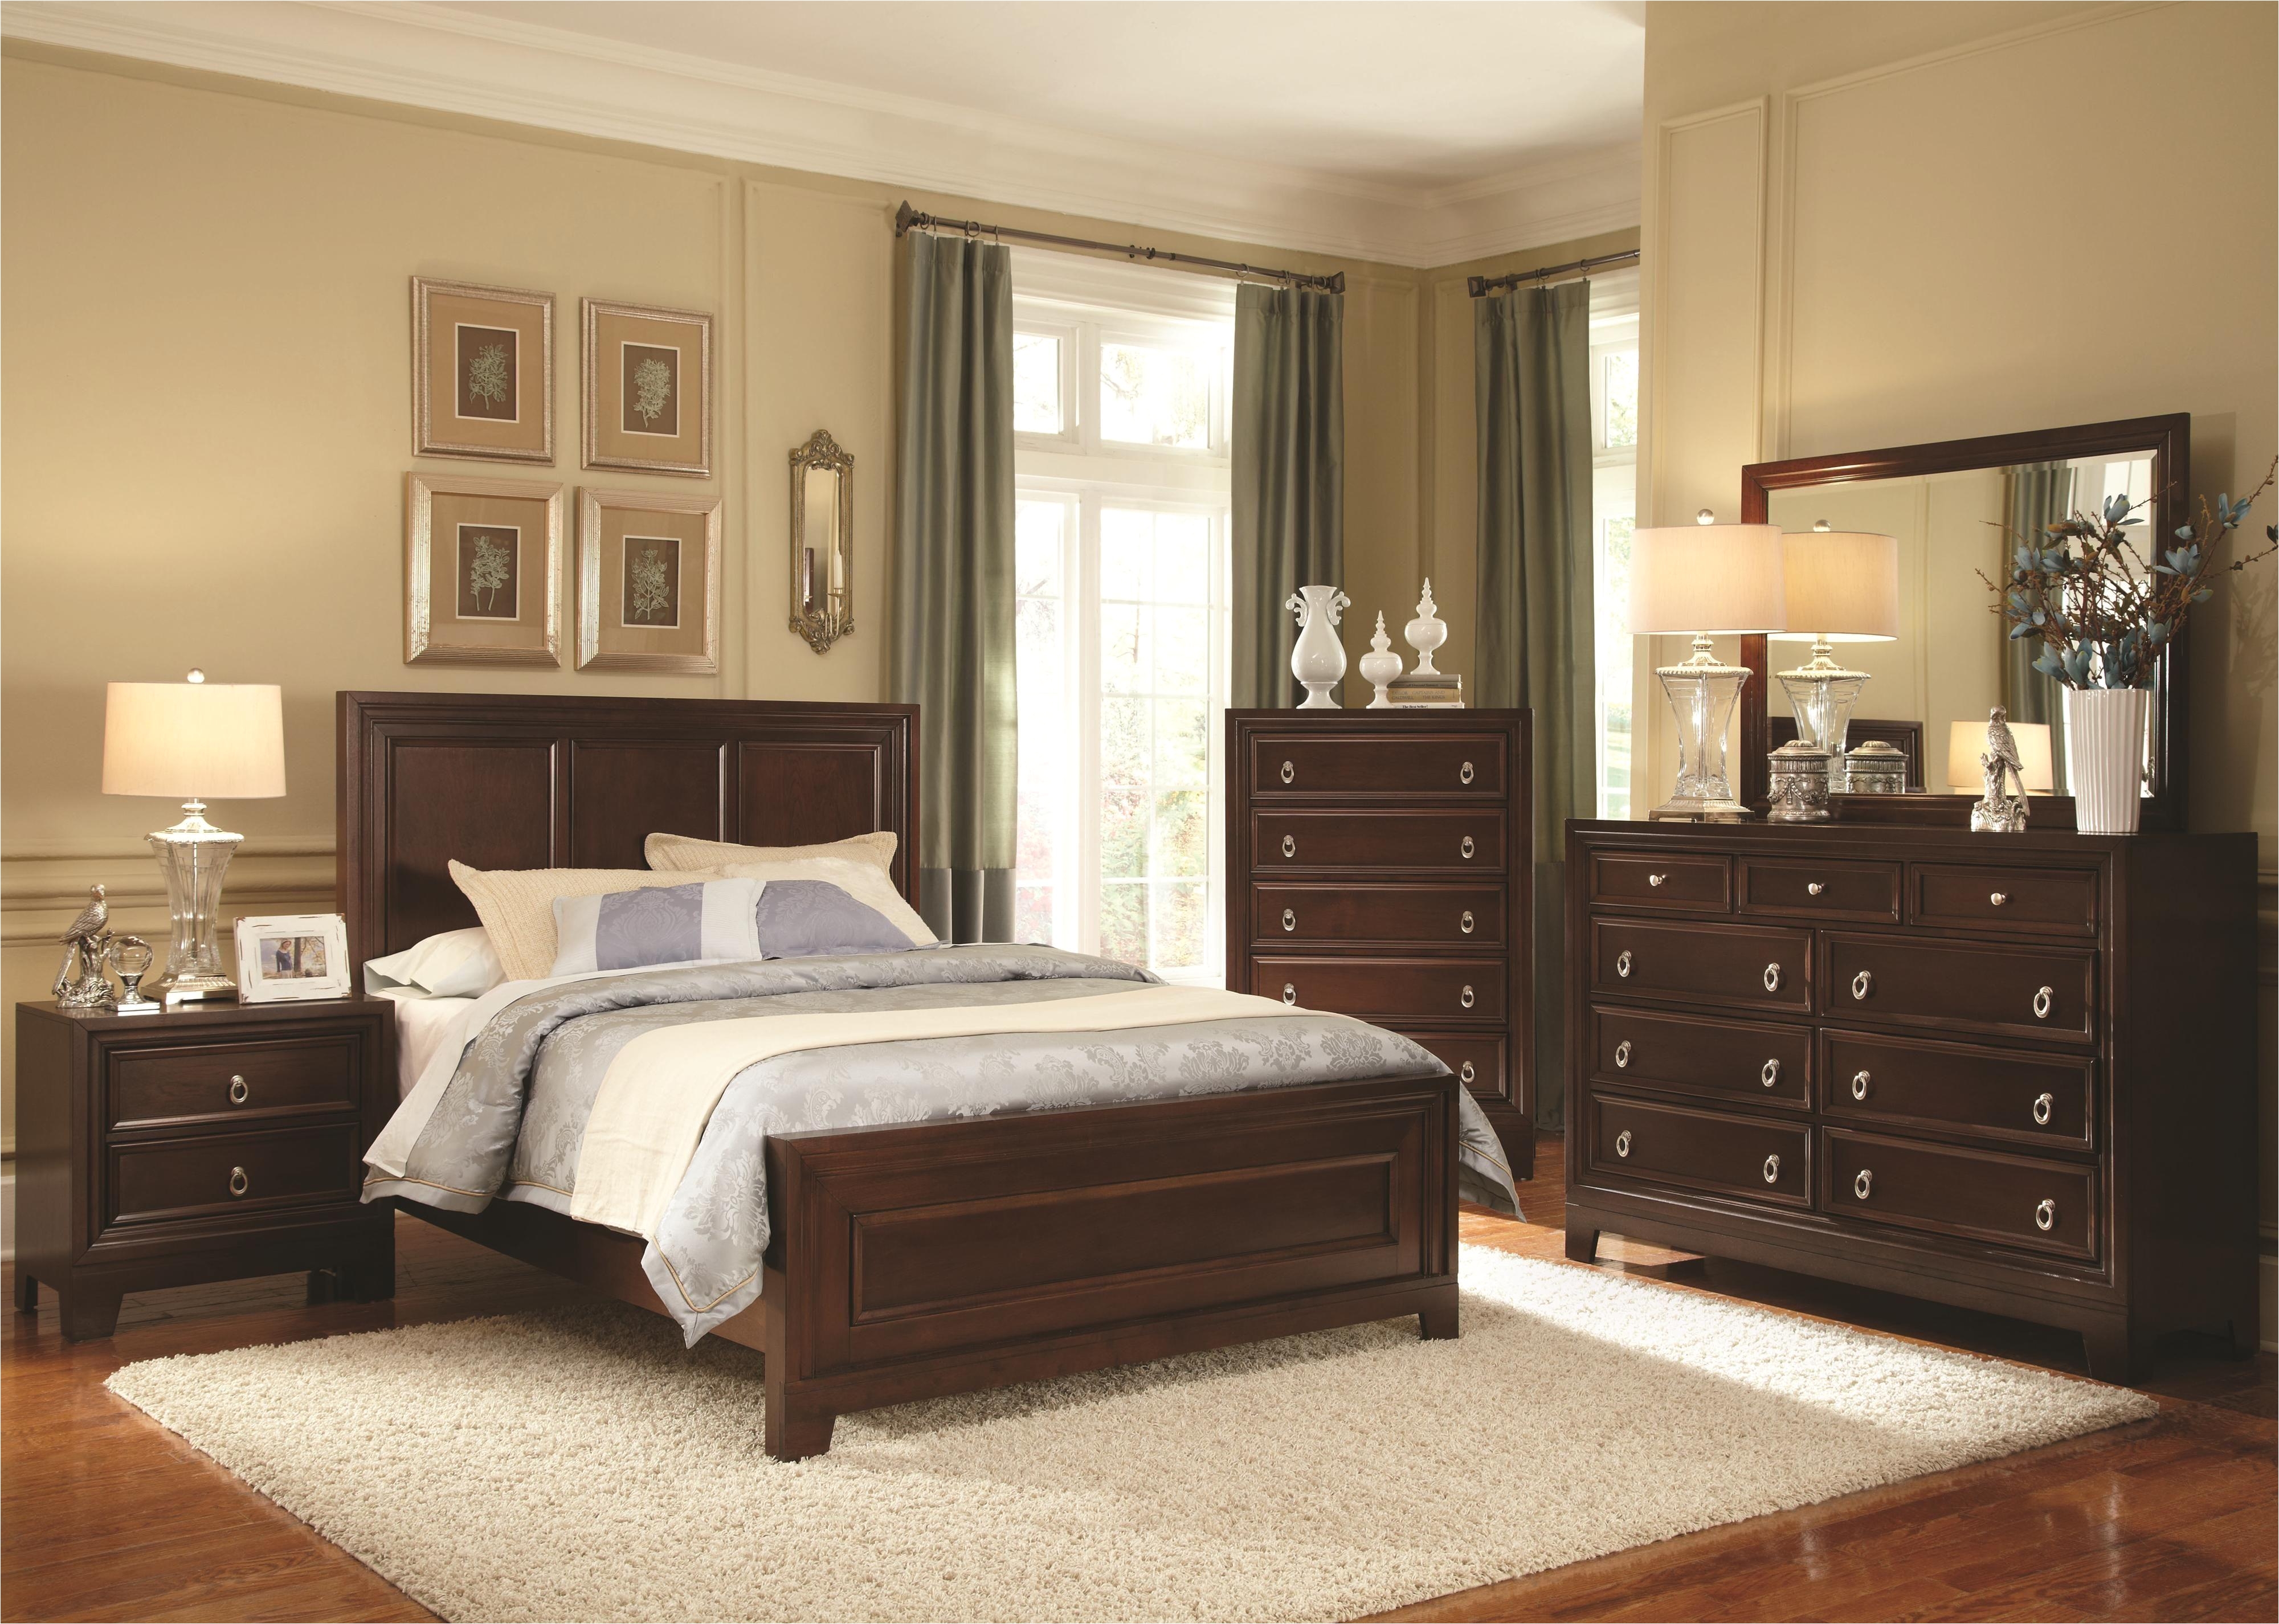 wood bedroom sets beautiful nortin by coaster coaster fine furniture coaster nortin